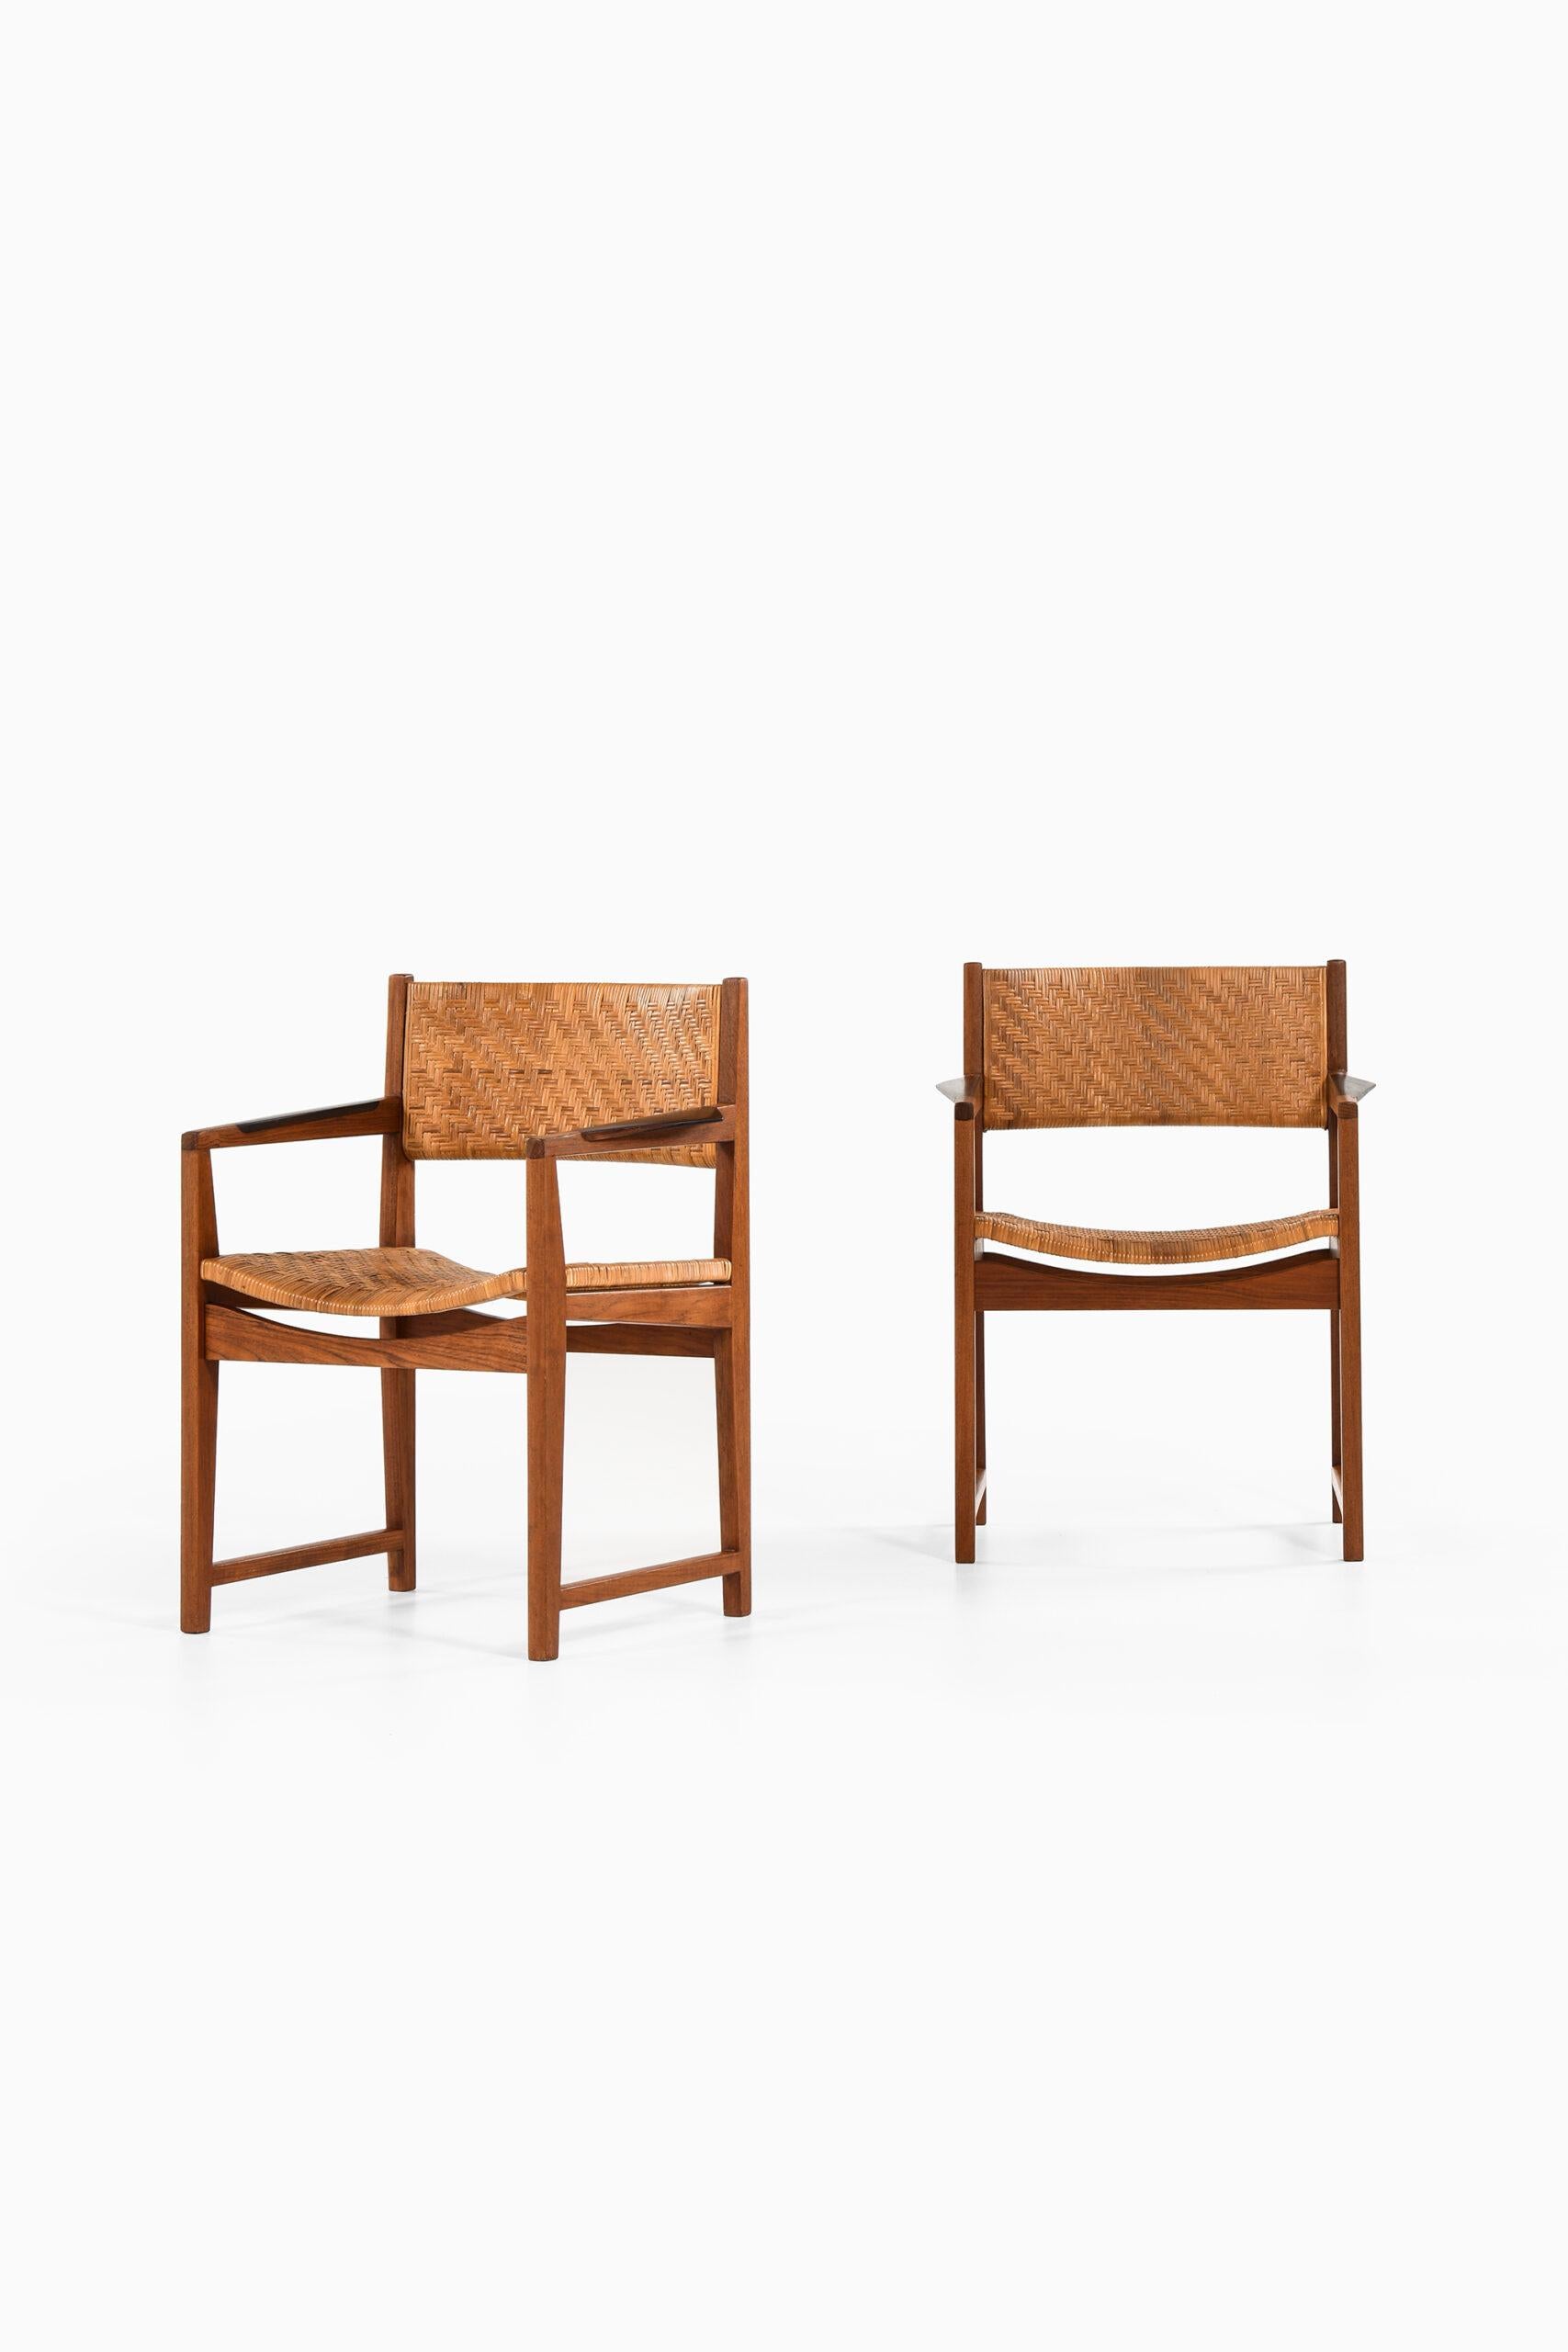 Rare pair of armchairs model 350 designed by Peter Hvidt & Orla Mølgaard-Nielsen. Produced by Søborg Møbler in Denmark.
Price listed is / item.